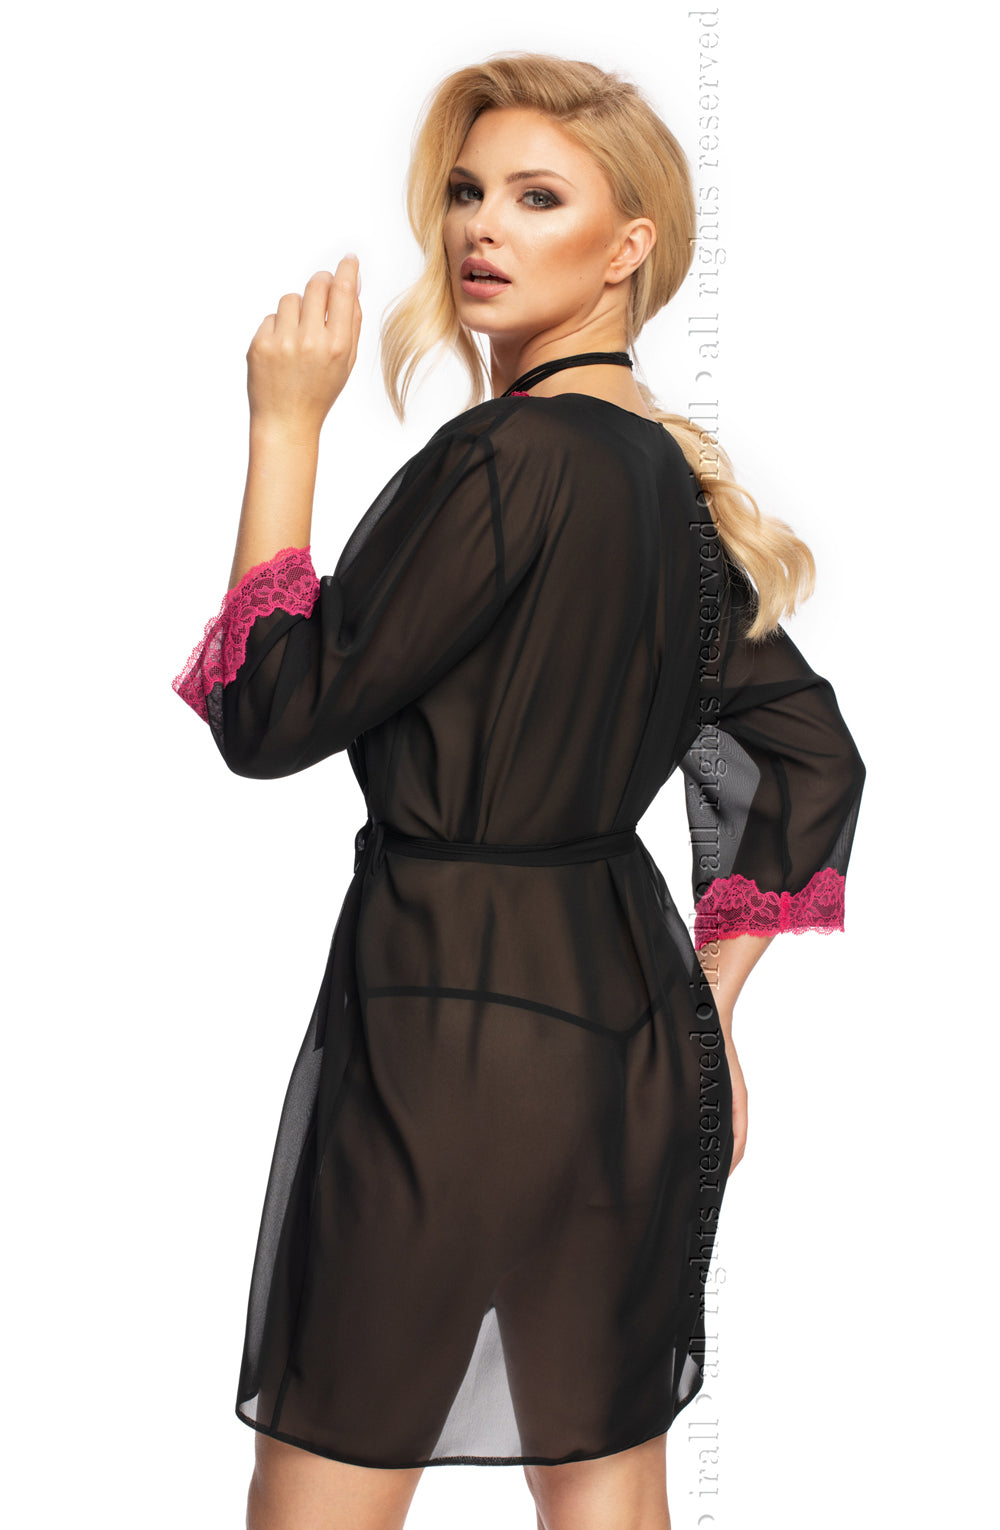 Irall Erotic Flavia Dressing Gown - PureDiva